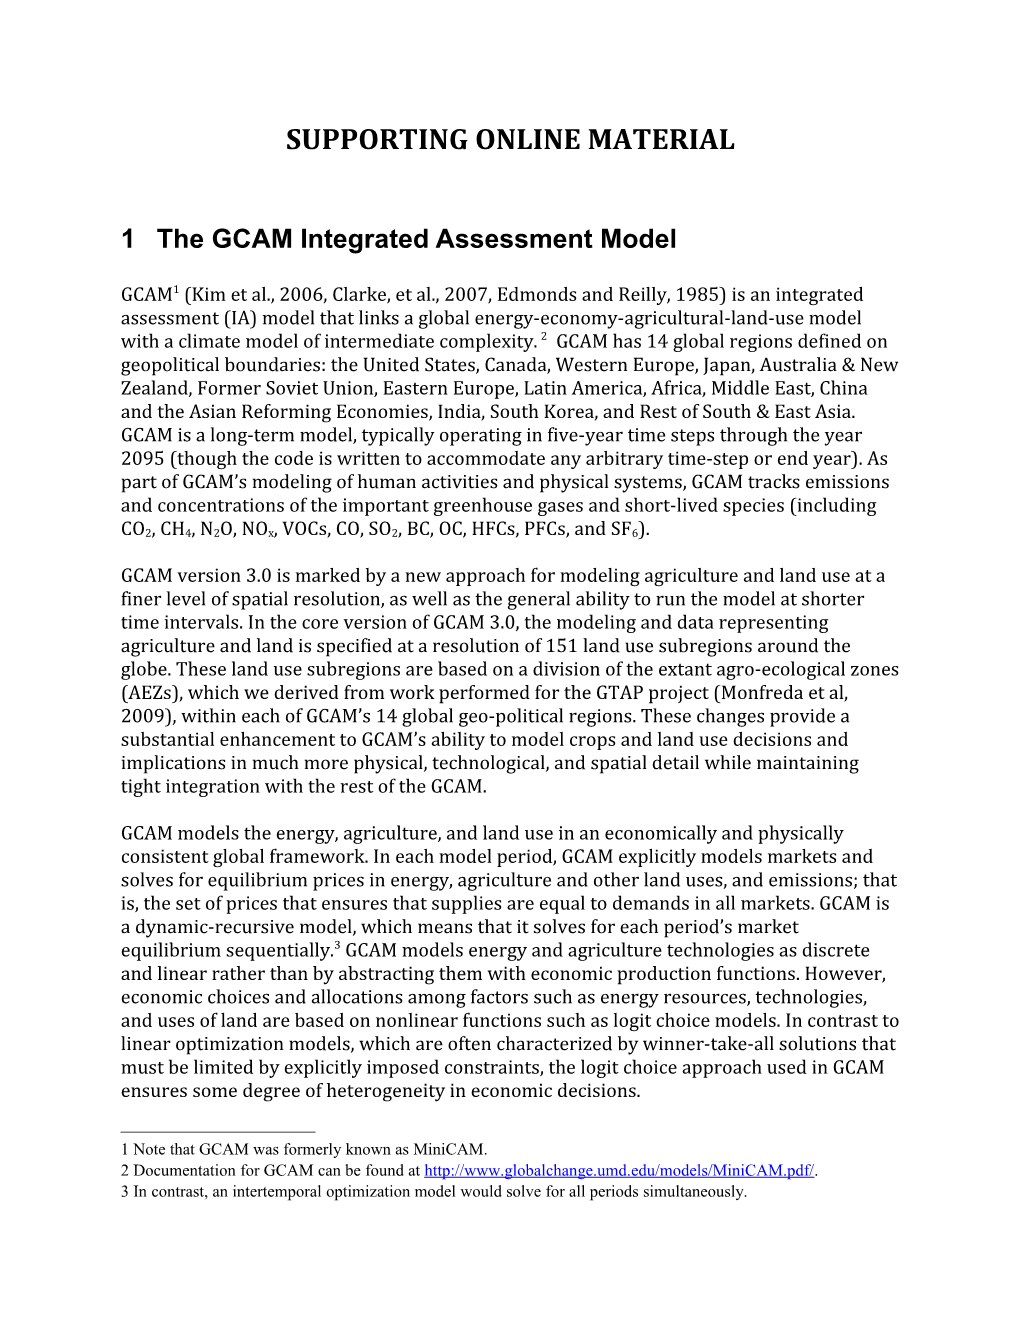 1 the GCAM Integrated Assessment Model